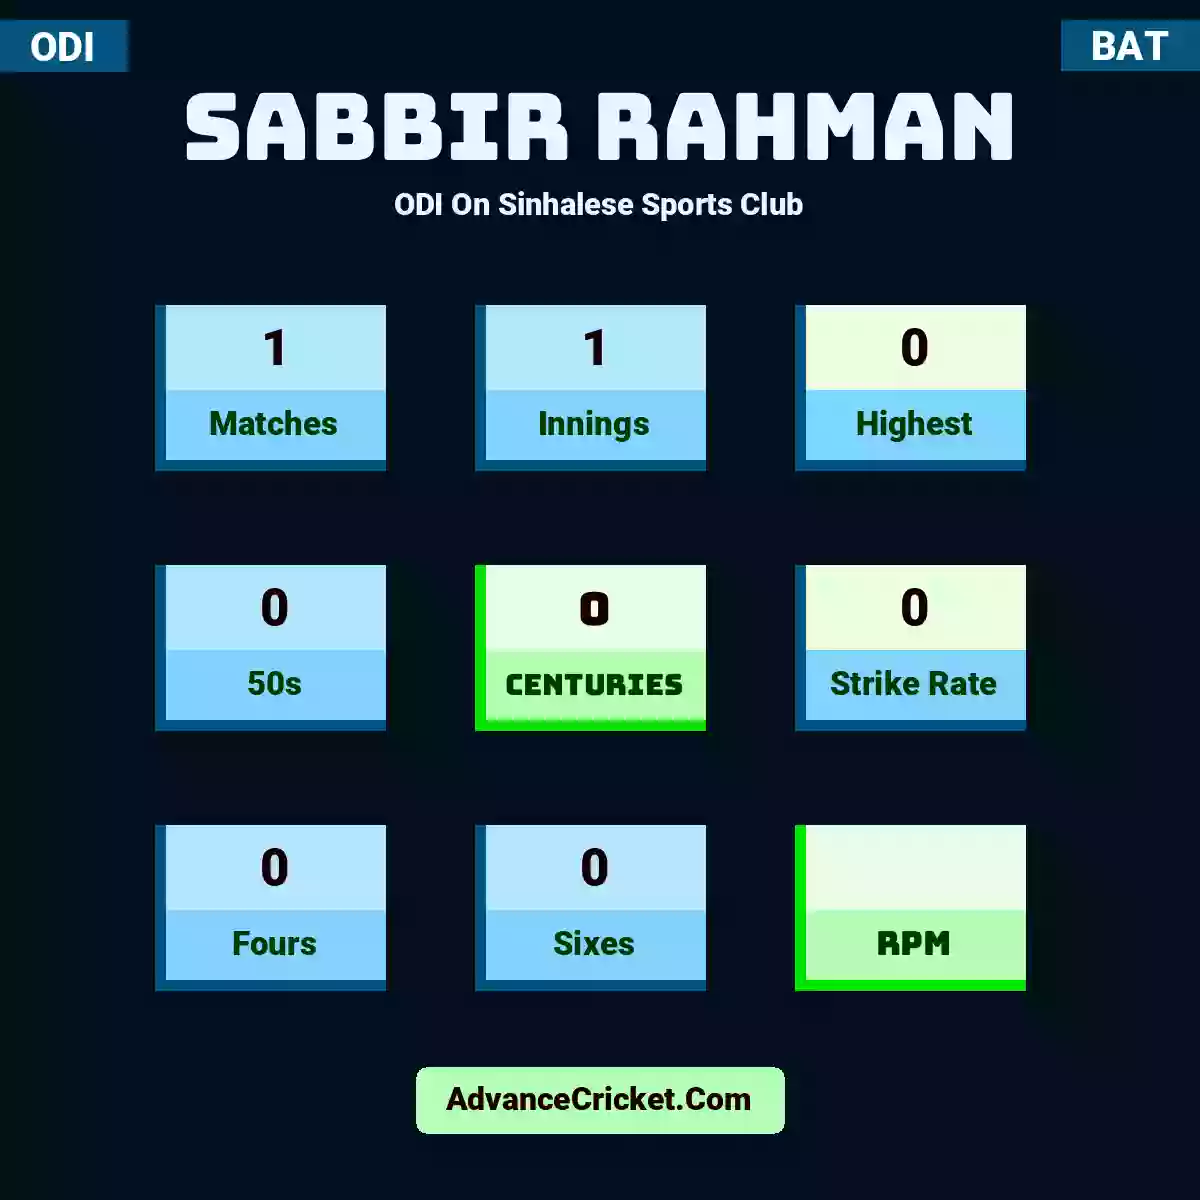 Sabbir Rahman ODI  On Sinhalese Sports Club, Sabbir Rahman played 1 matches, scored 0 runs as highest, 0 half-centuries, and 0 centuries, with a strike rate of 0. S.Rahman hit 0 fours and 0 sixes.